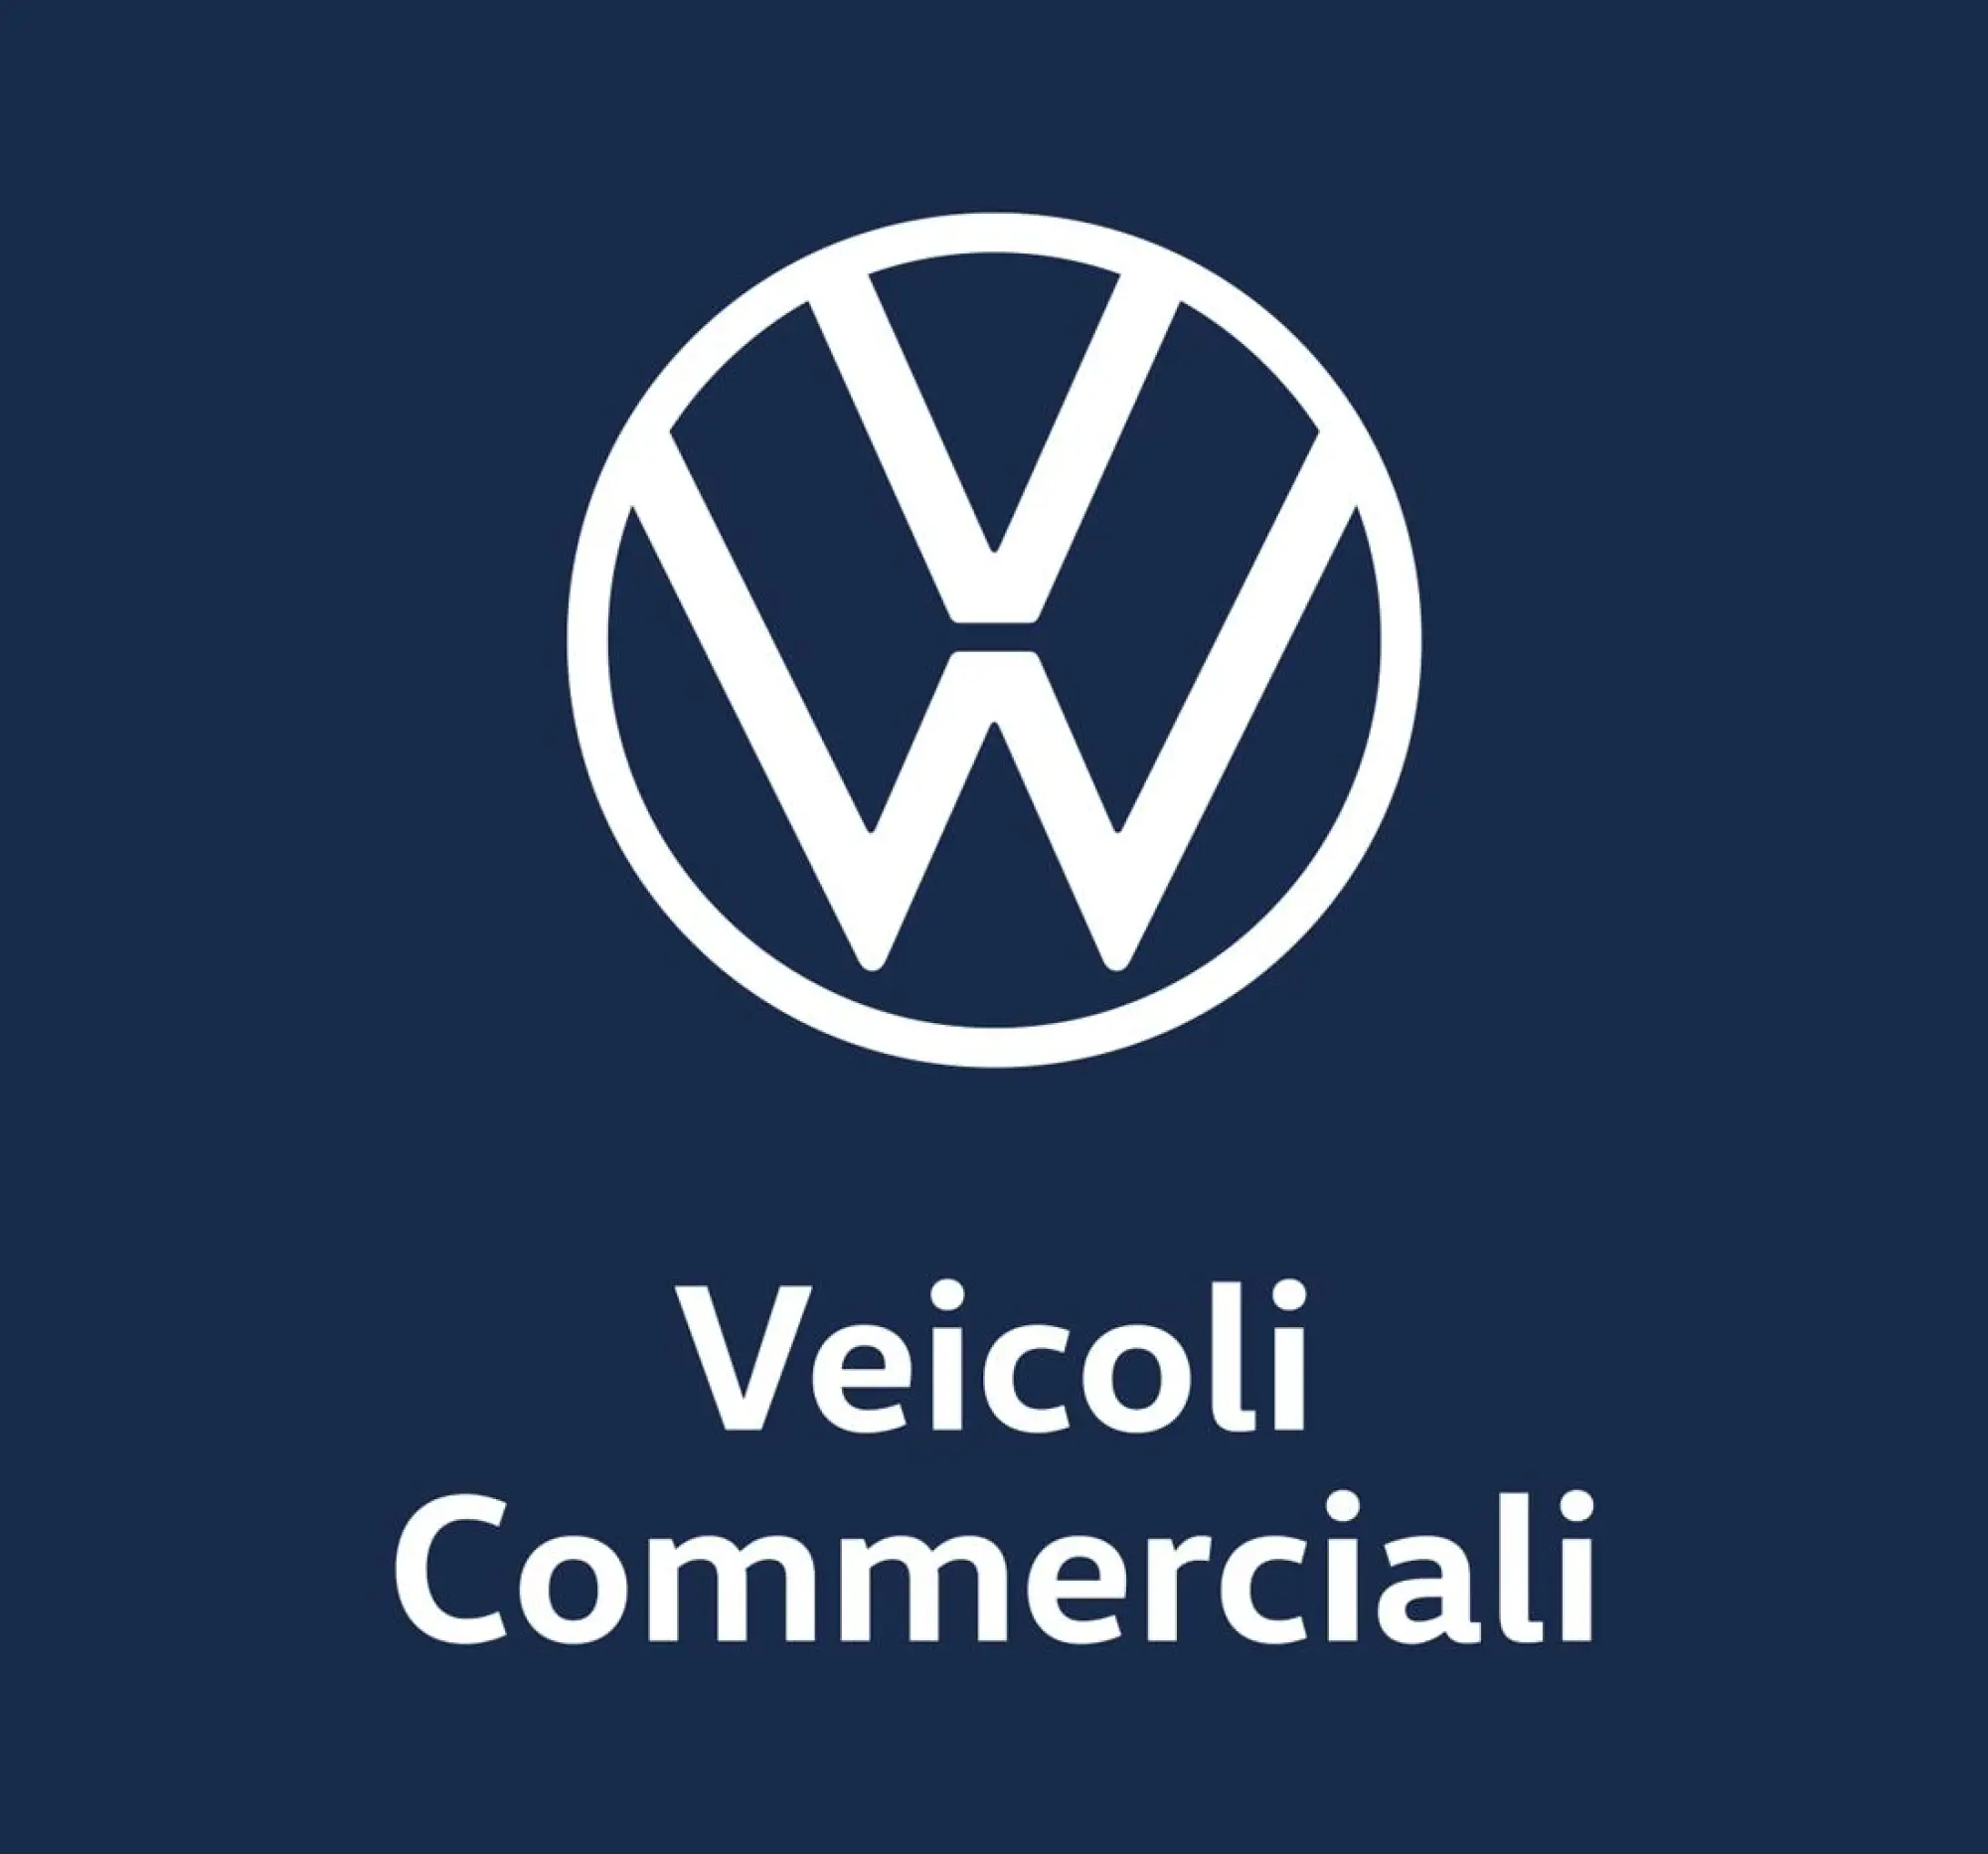 Volkswagen Veicoli Commerciali - Restyling logo - 5